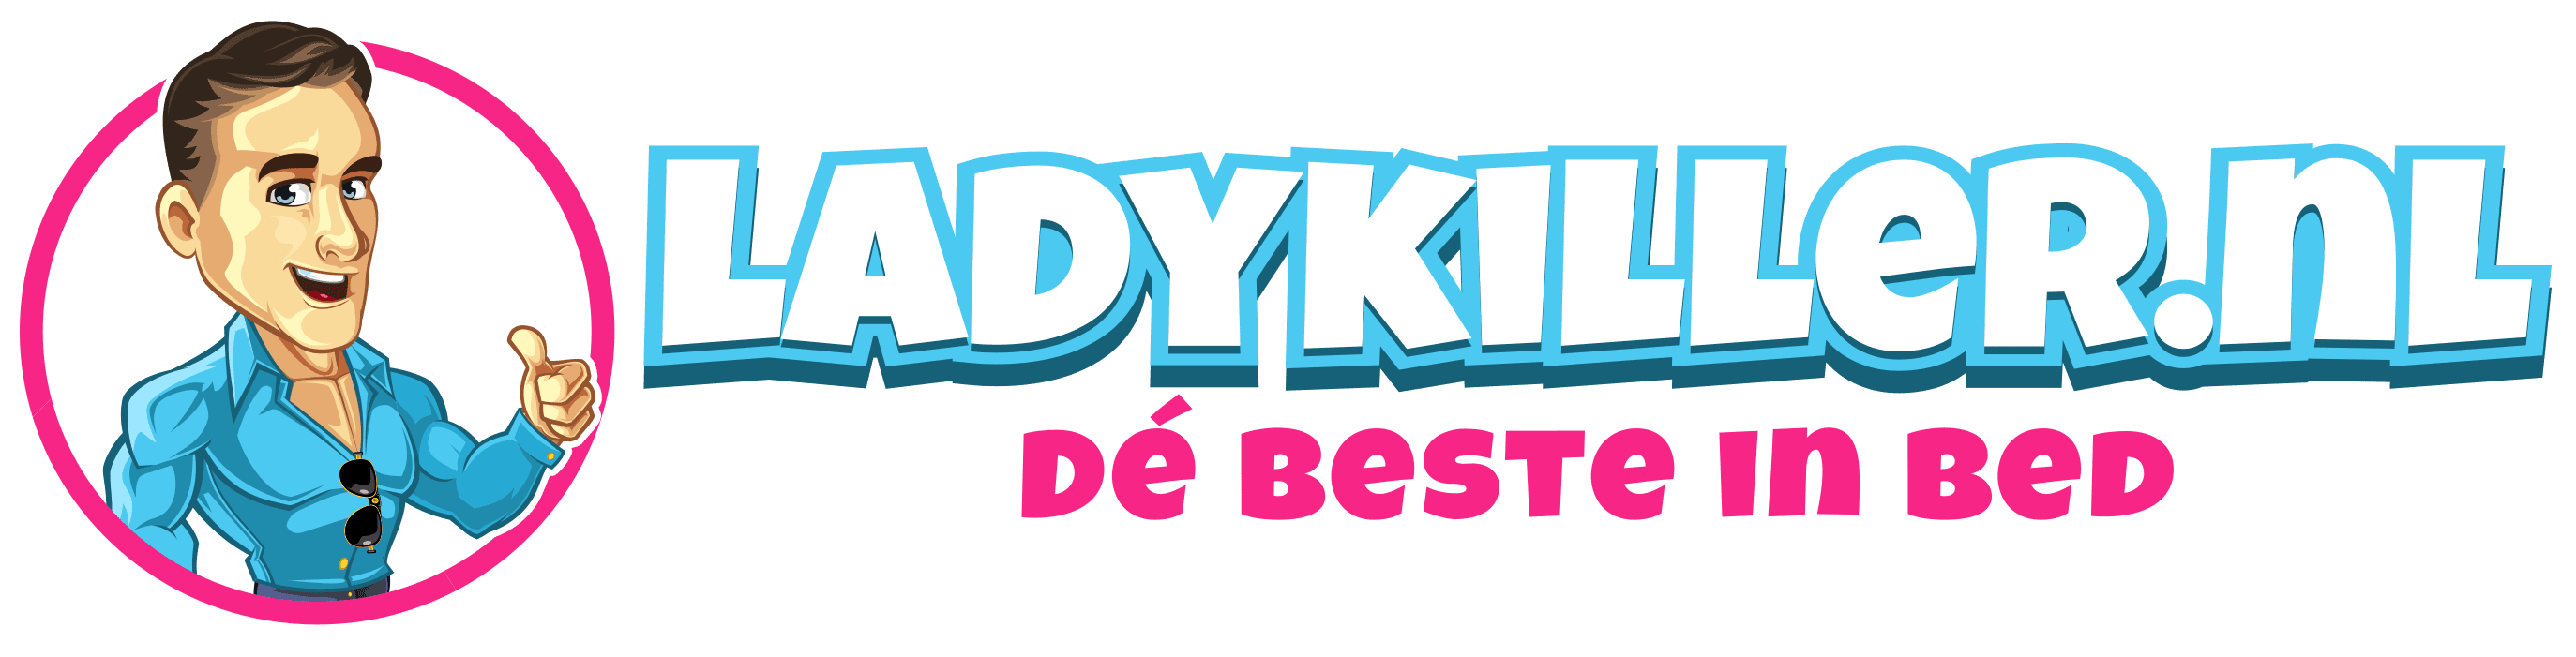 ladykiller logo